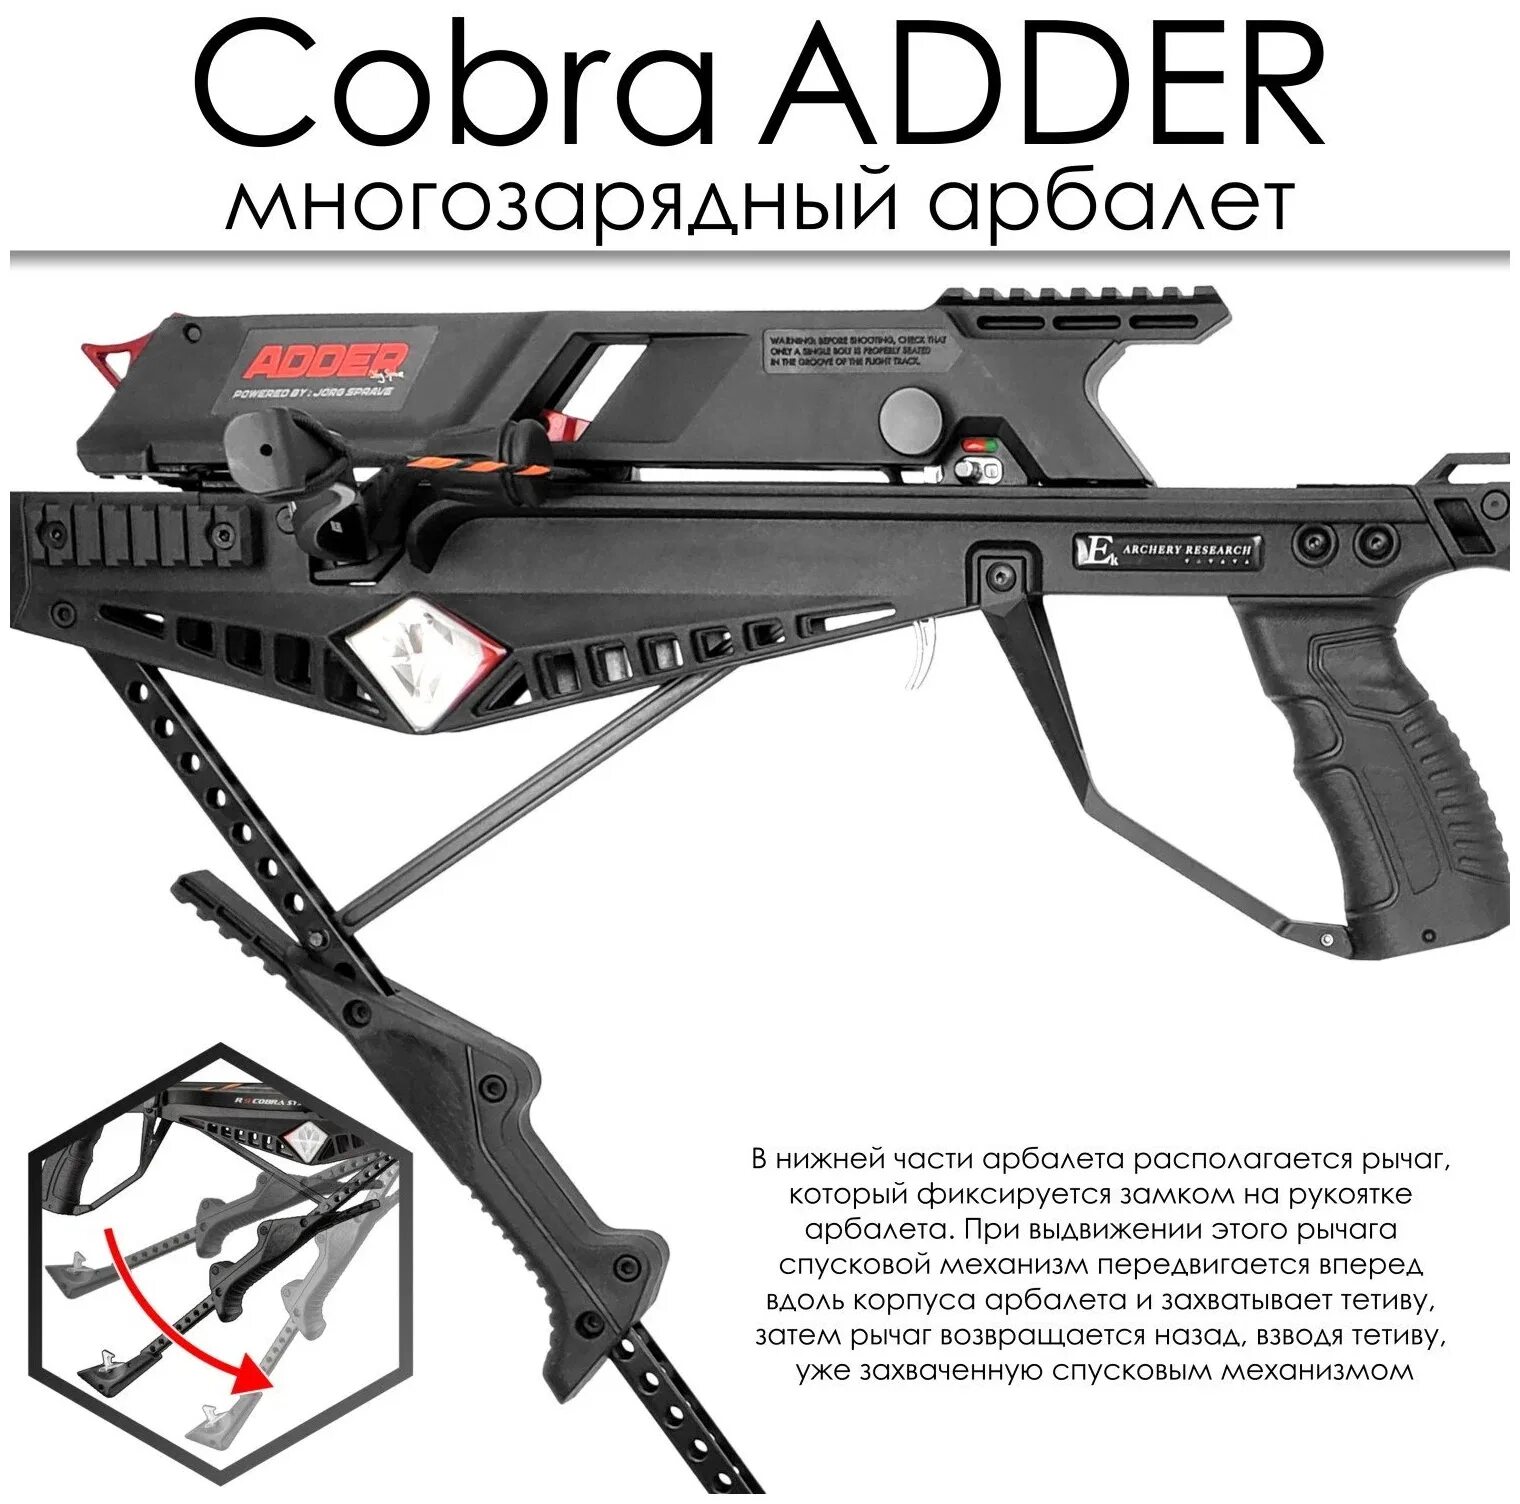 Cobra rx. Арбалет многозарядный Ek Cobra System RX Adder. Арбалет Cobra RX Adder. Ek Archery Cobra RX 130. Многозарядный арбалет Cobra RX блочный.